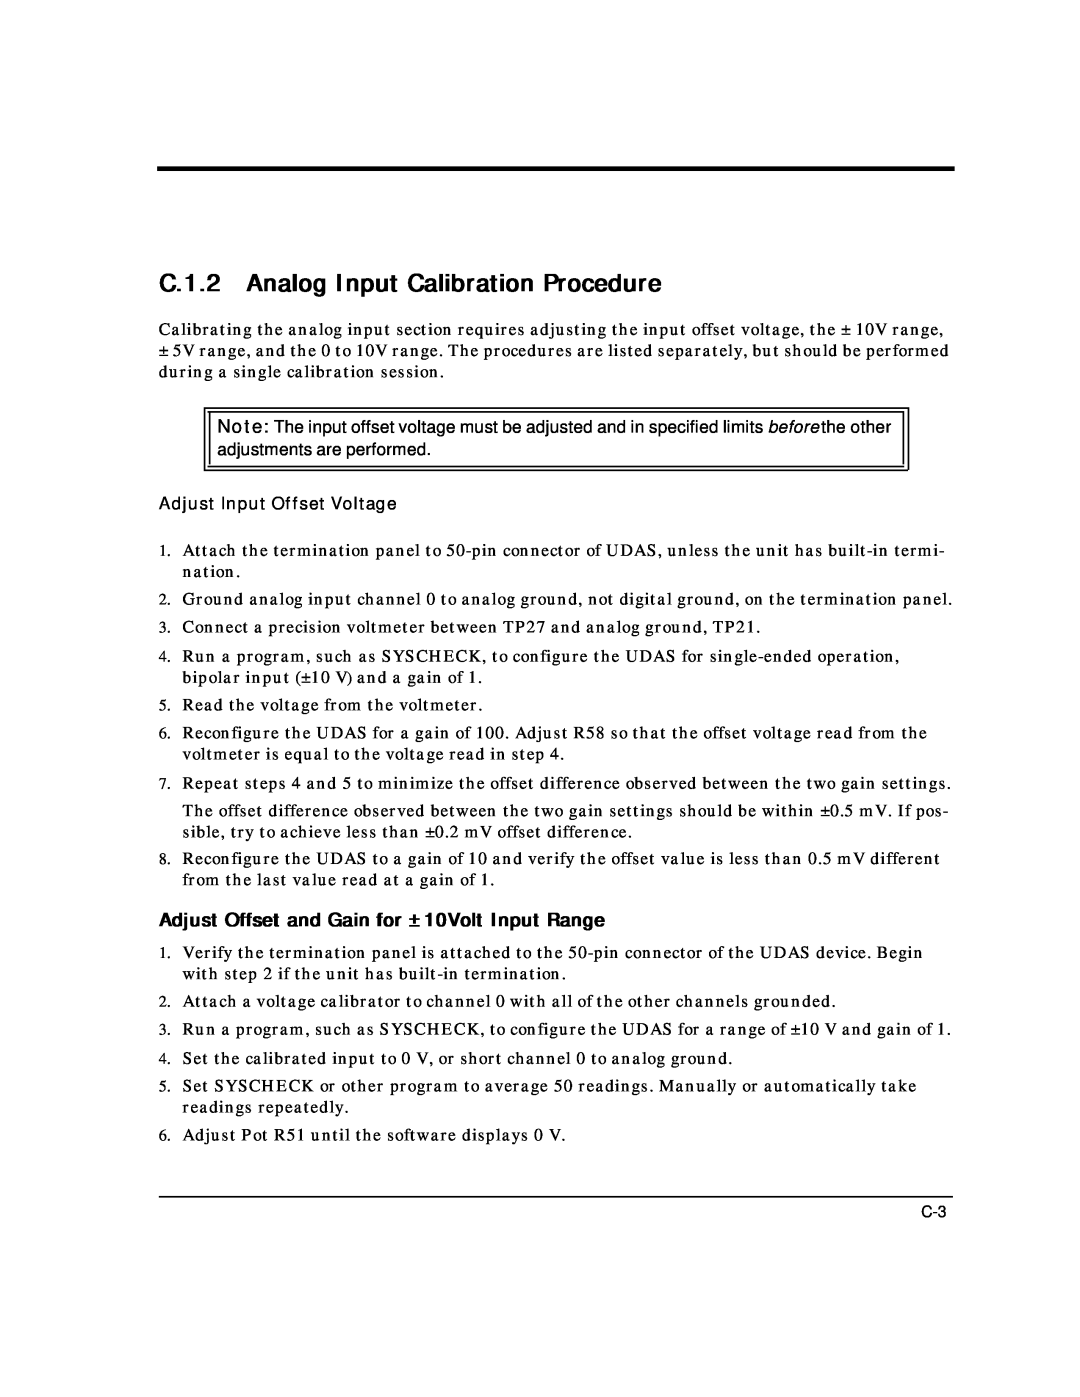 Intelligent Motion Systems UDAS-1001E user manual C.1.2 Analog Input Calibration Procedure, Adjust Input Offset Voltage 